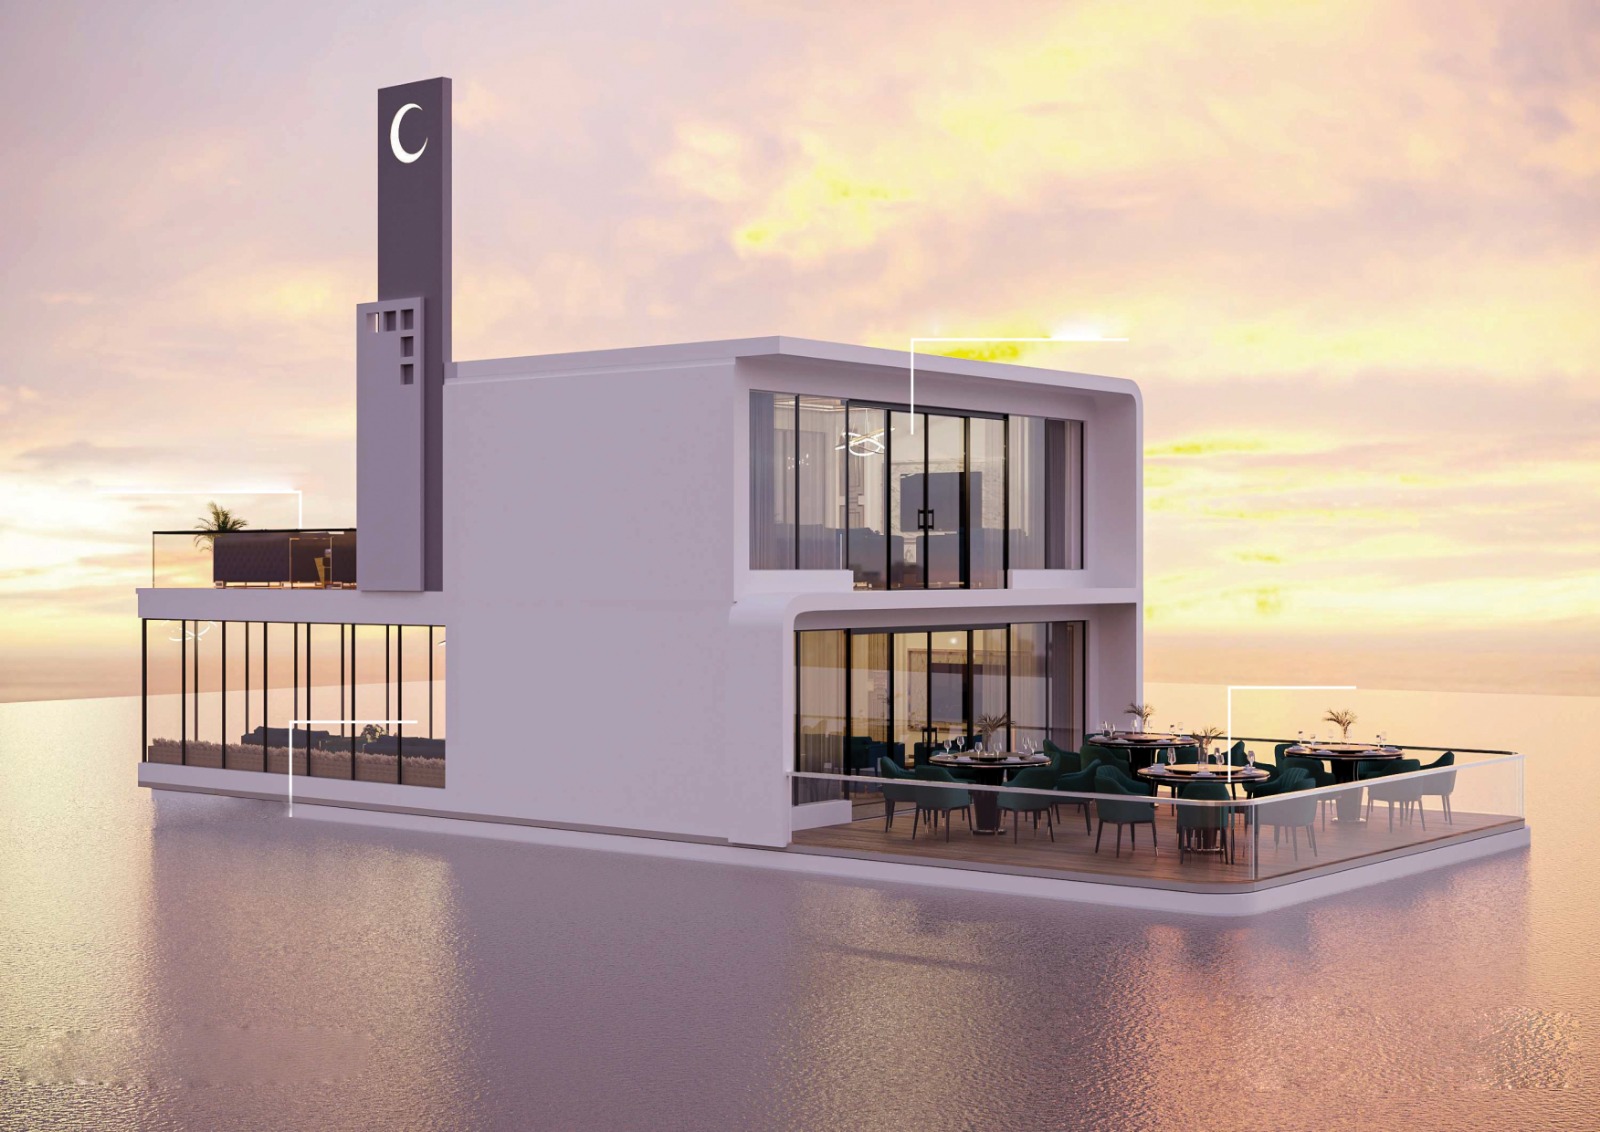 Dubai to Build World's First Floating Mosque - UAE - Emirates24|7